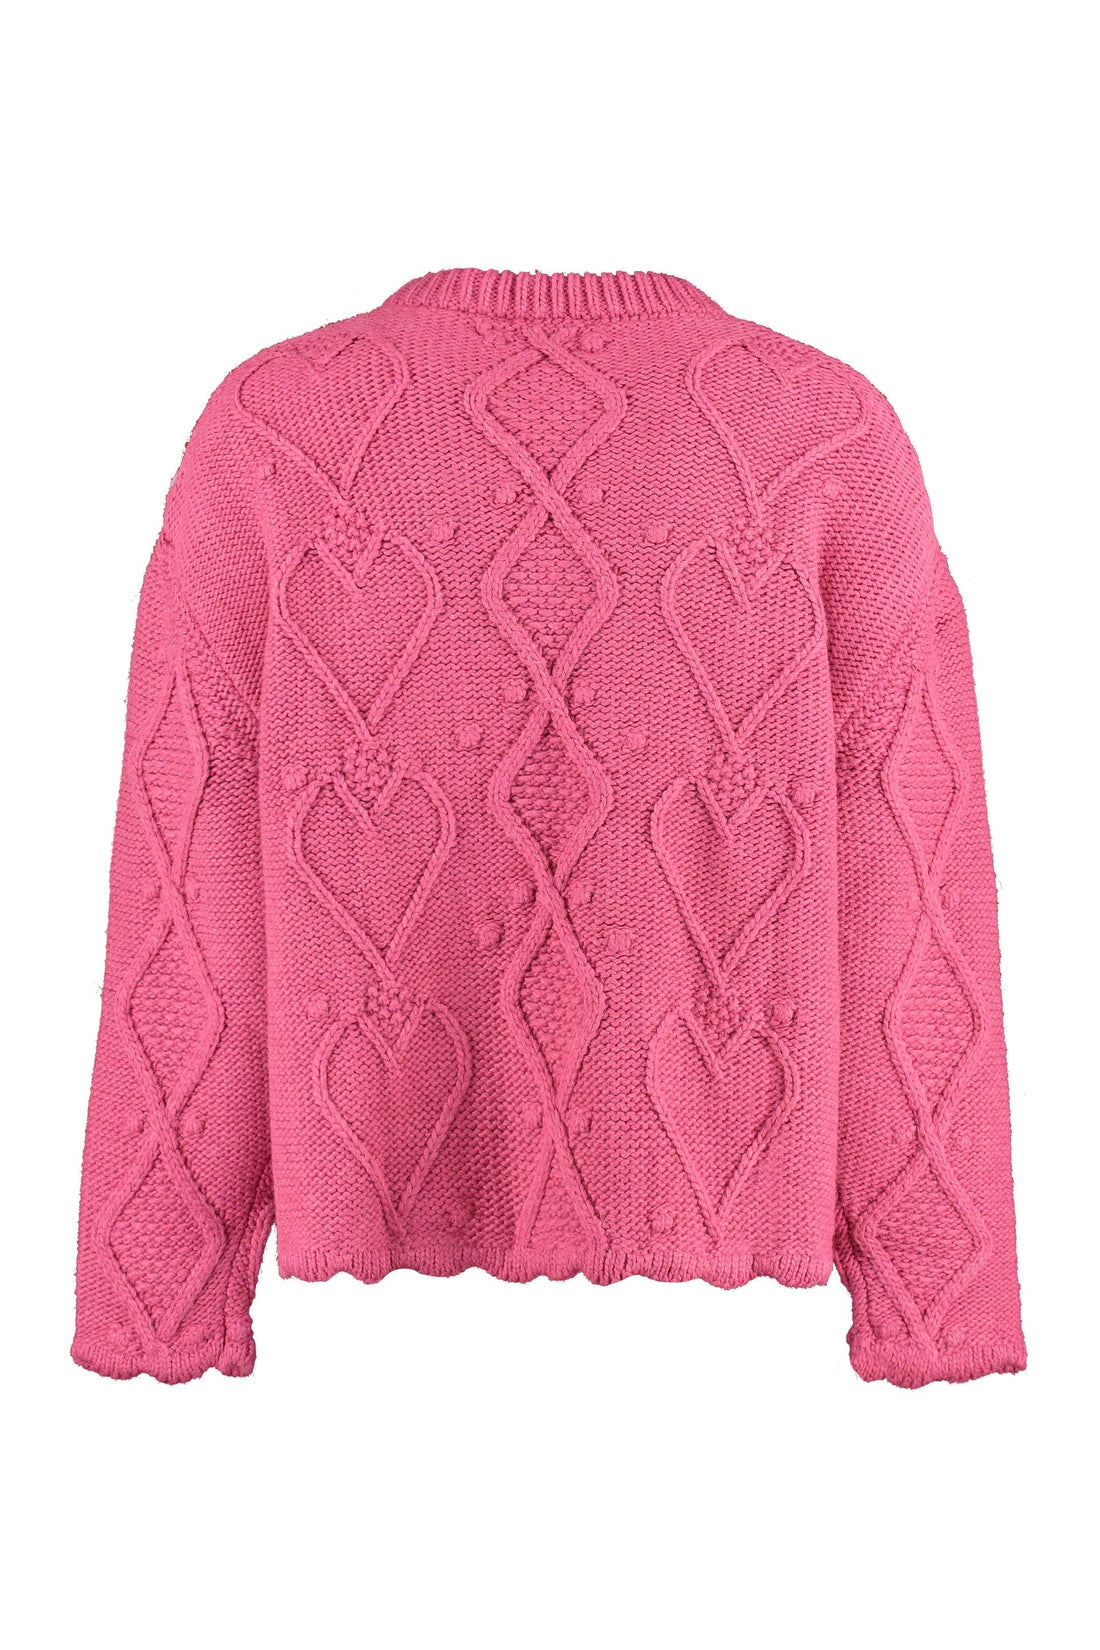 GCDS-OUTLET-SALE-Wool blend pullover-ARCHIVIST